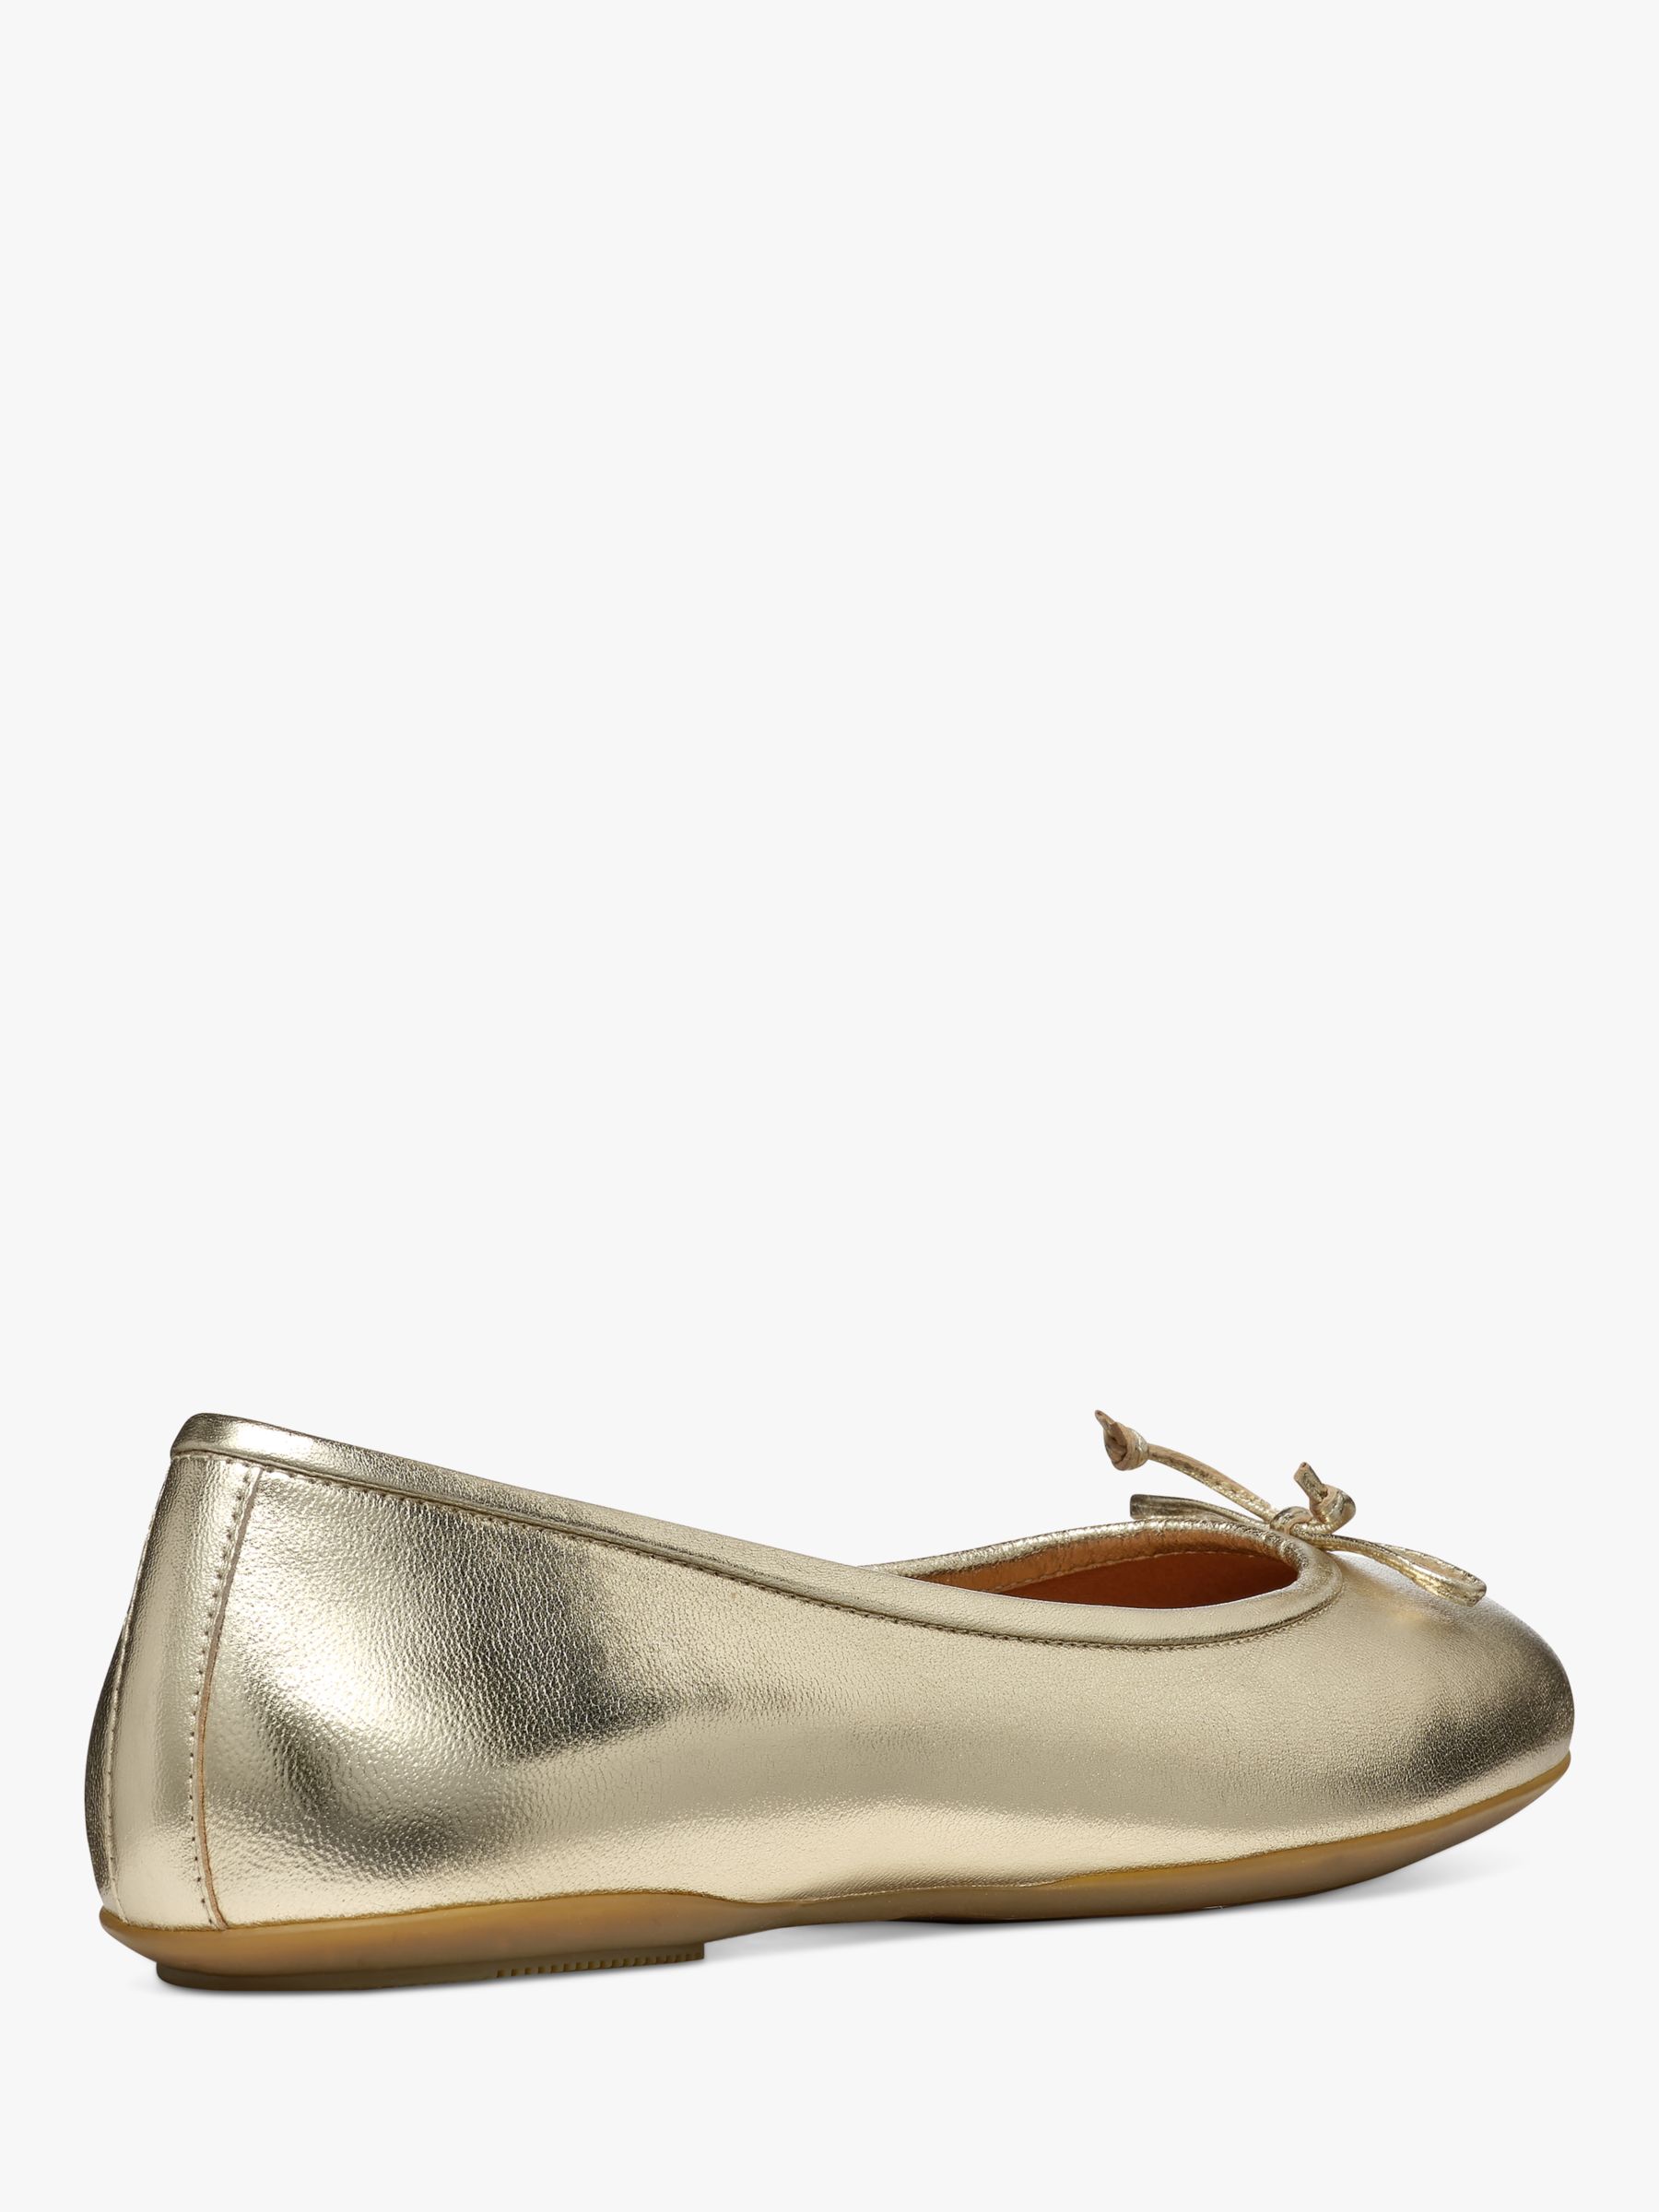 Geox Palmaria Leather Ballerina Shoes, Gold, EU40